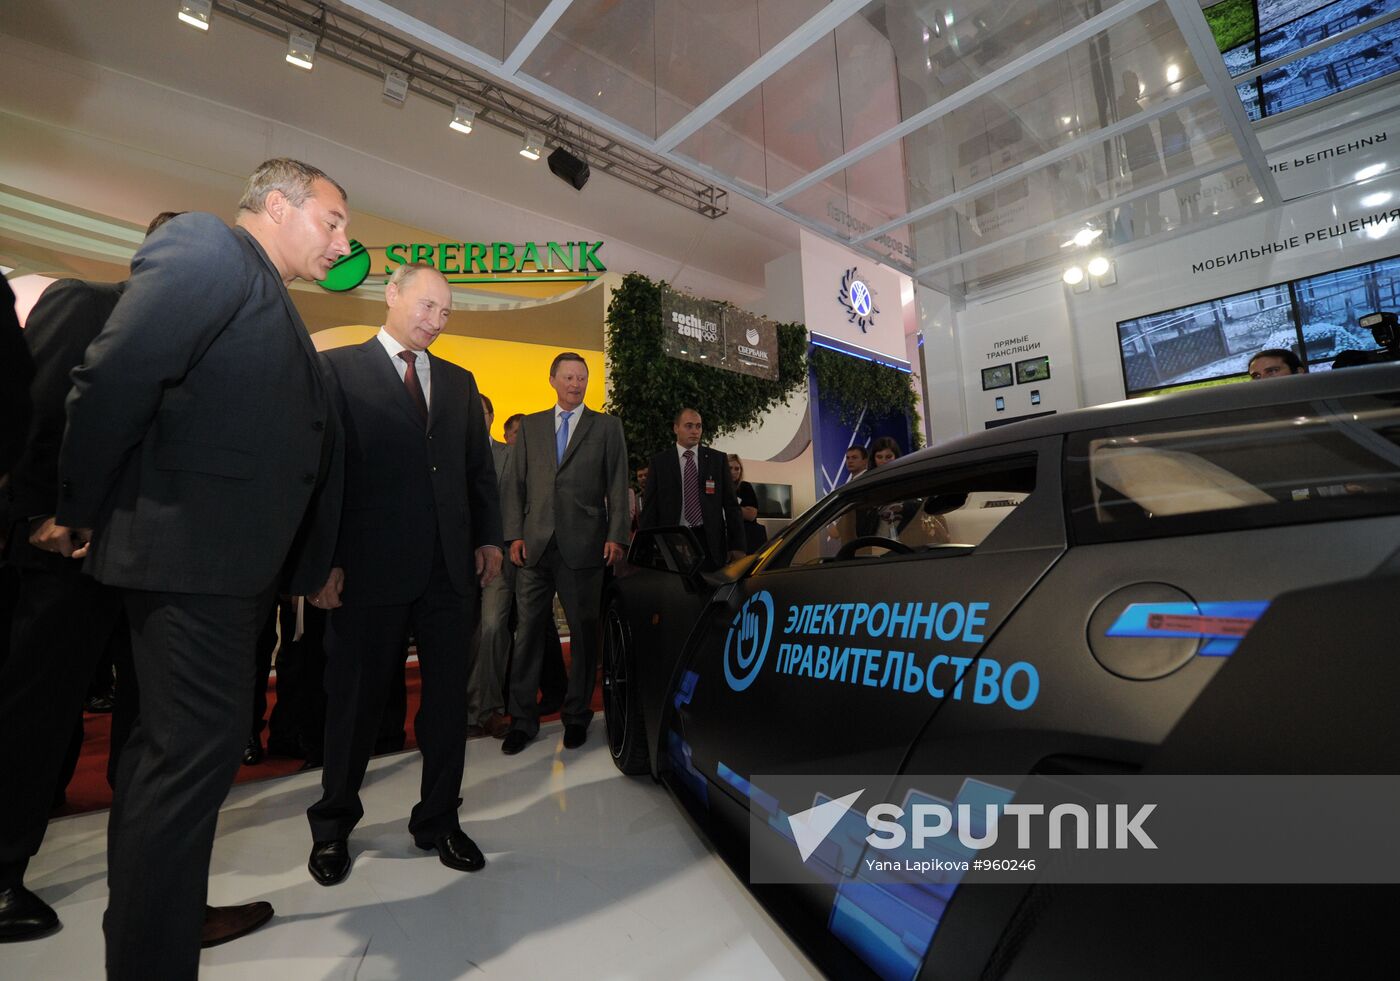 Vladimir Putin attends investment forum "Sochi-2011"